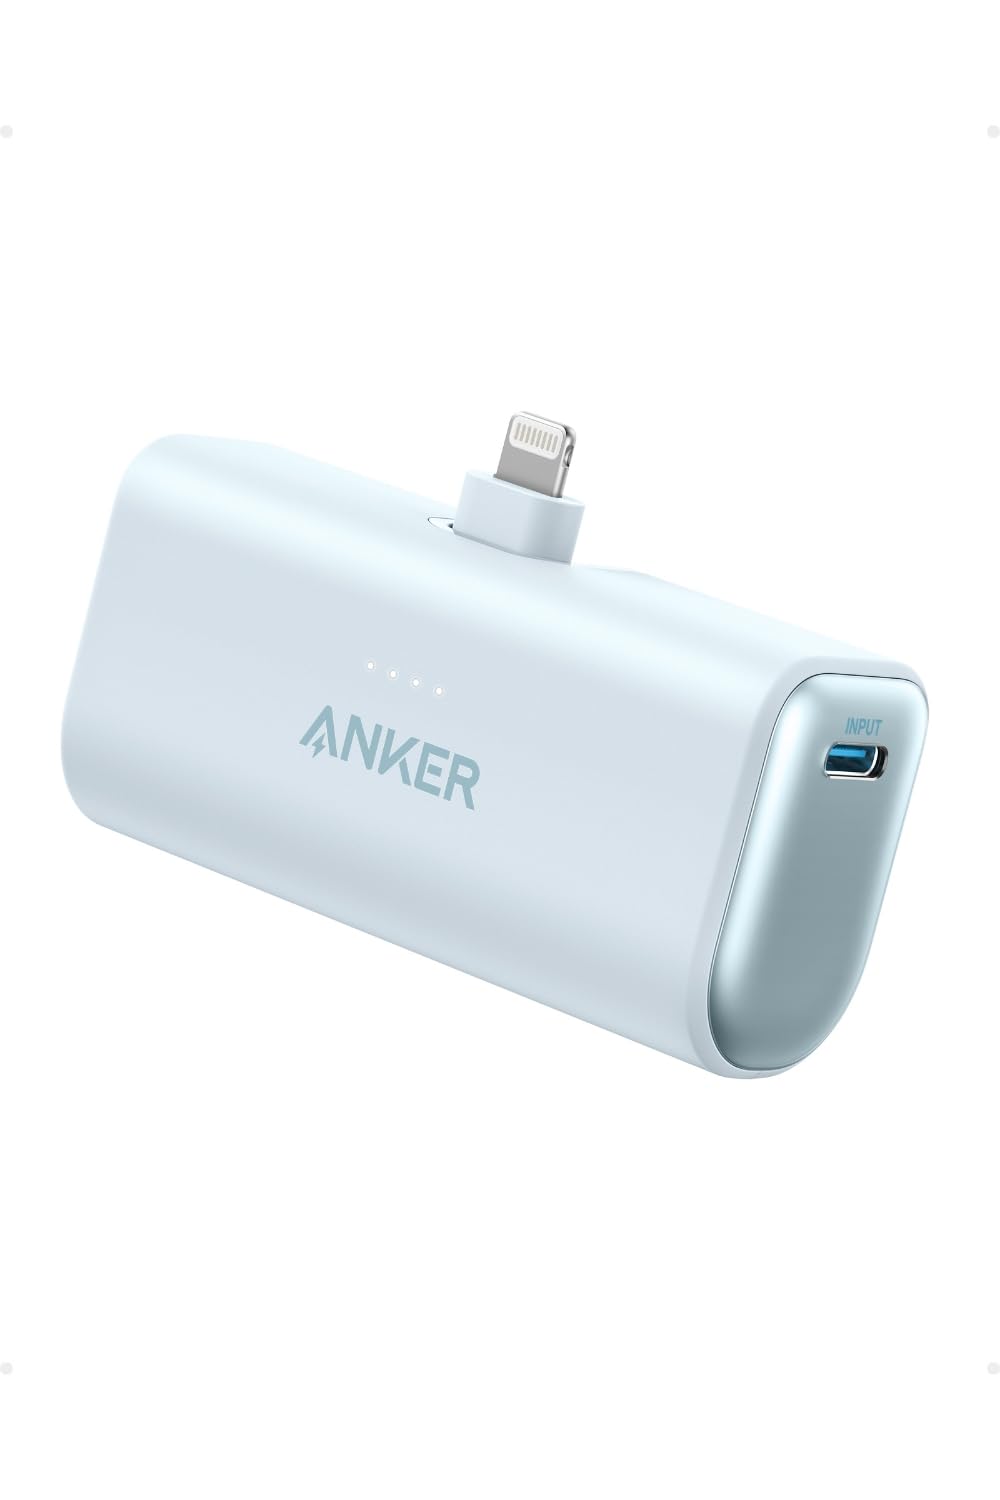 Anker Nano Power Bank (12W, Built-In Lightning Connector) (モバイルバッテリー 5000mAh 小型コンパクト)【MFi認証済/PowerIQ搭載/ライトニング端子一体型】 iPhone 14 /